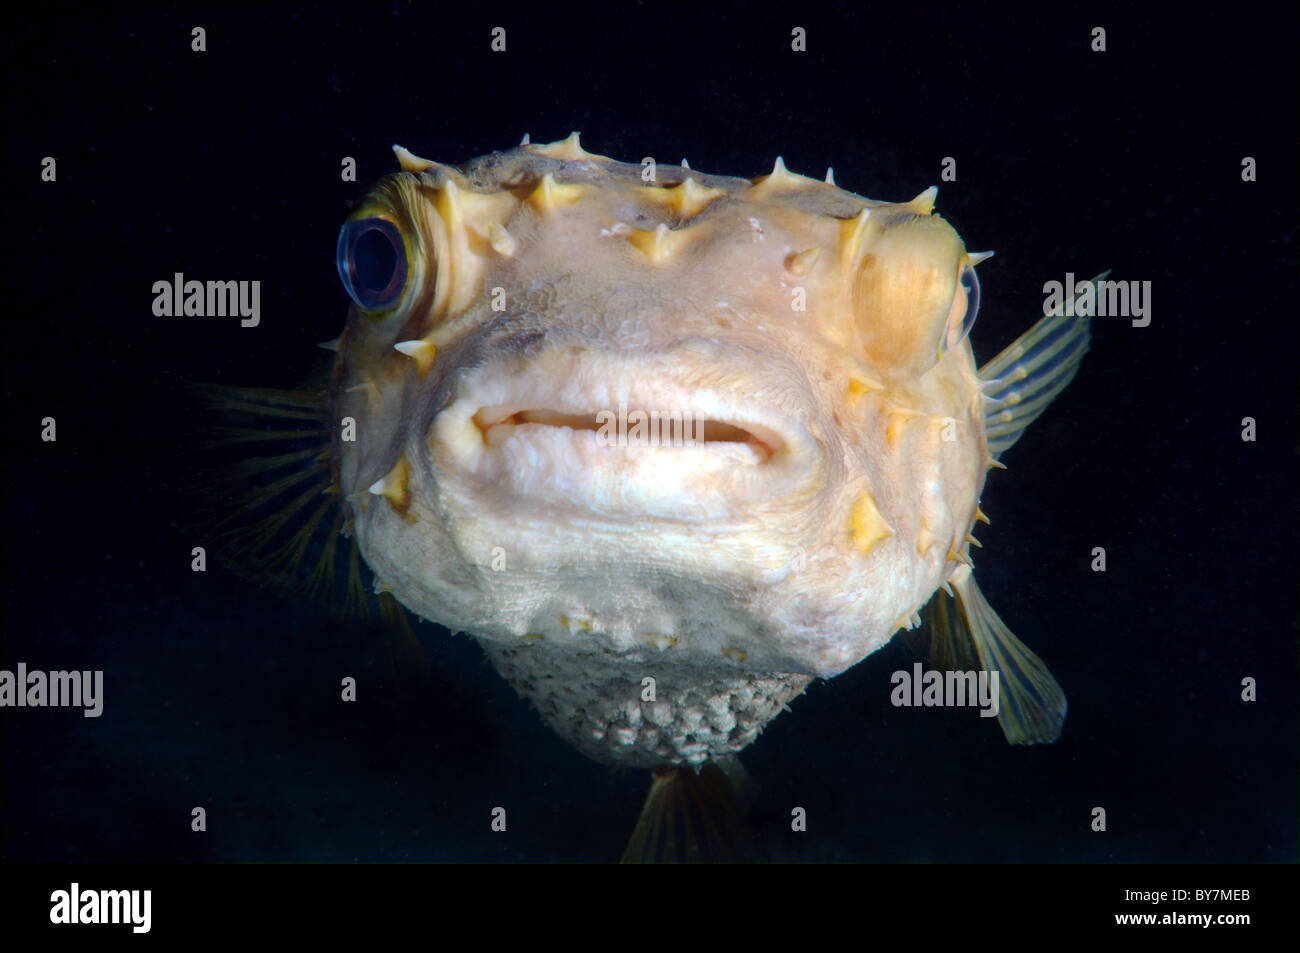 Cyclichtys orbicularis (Orbicular Burrfish) Stock Photo